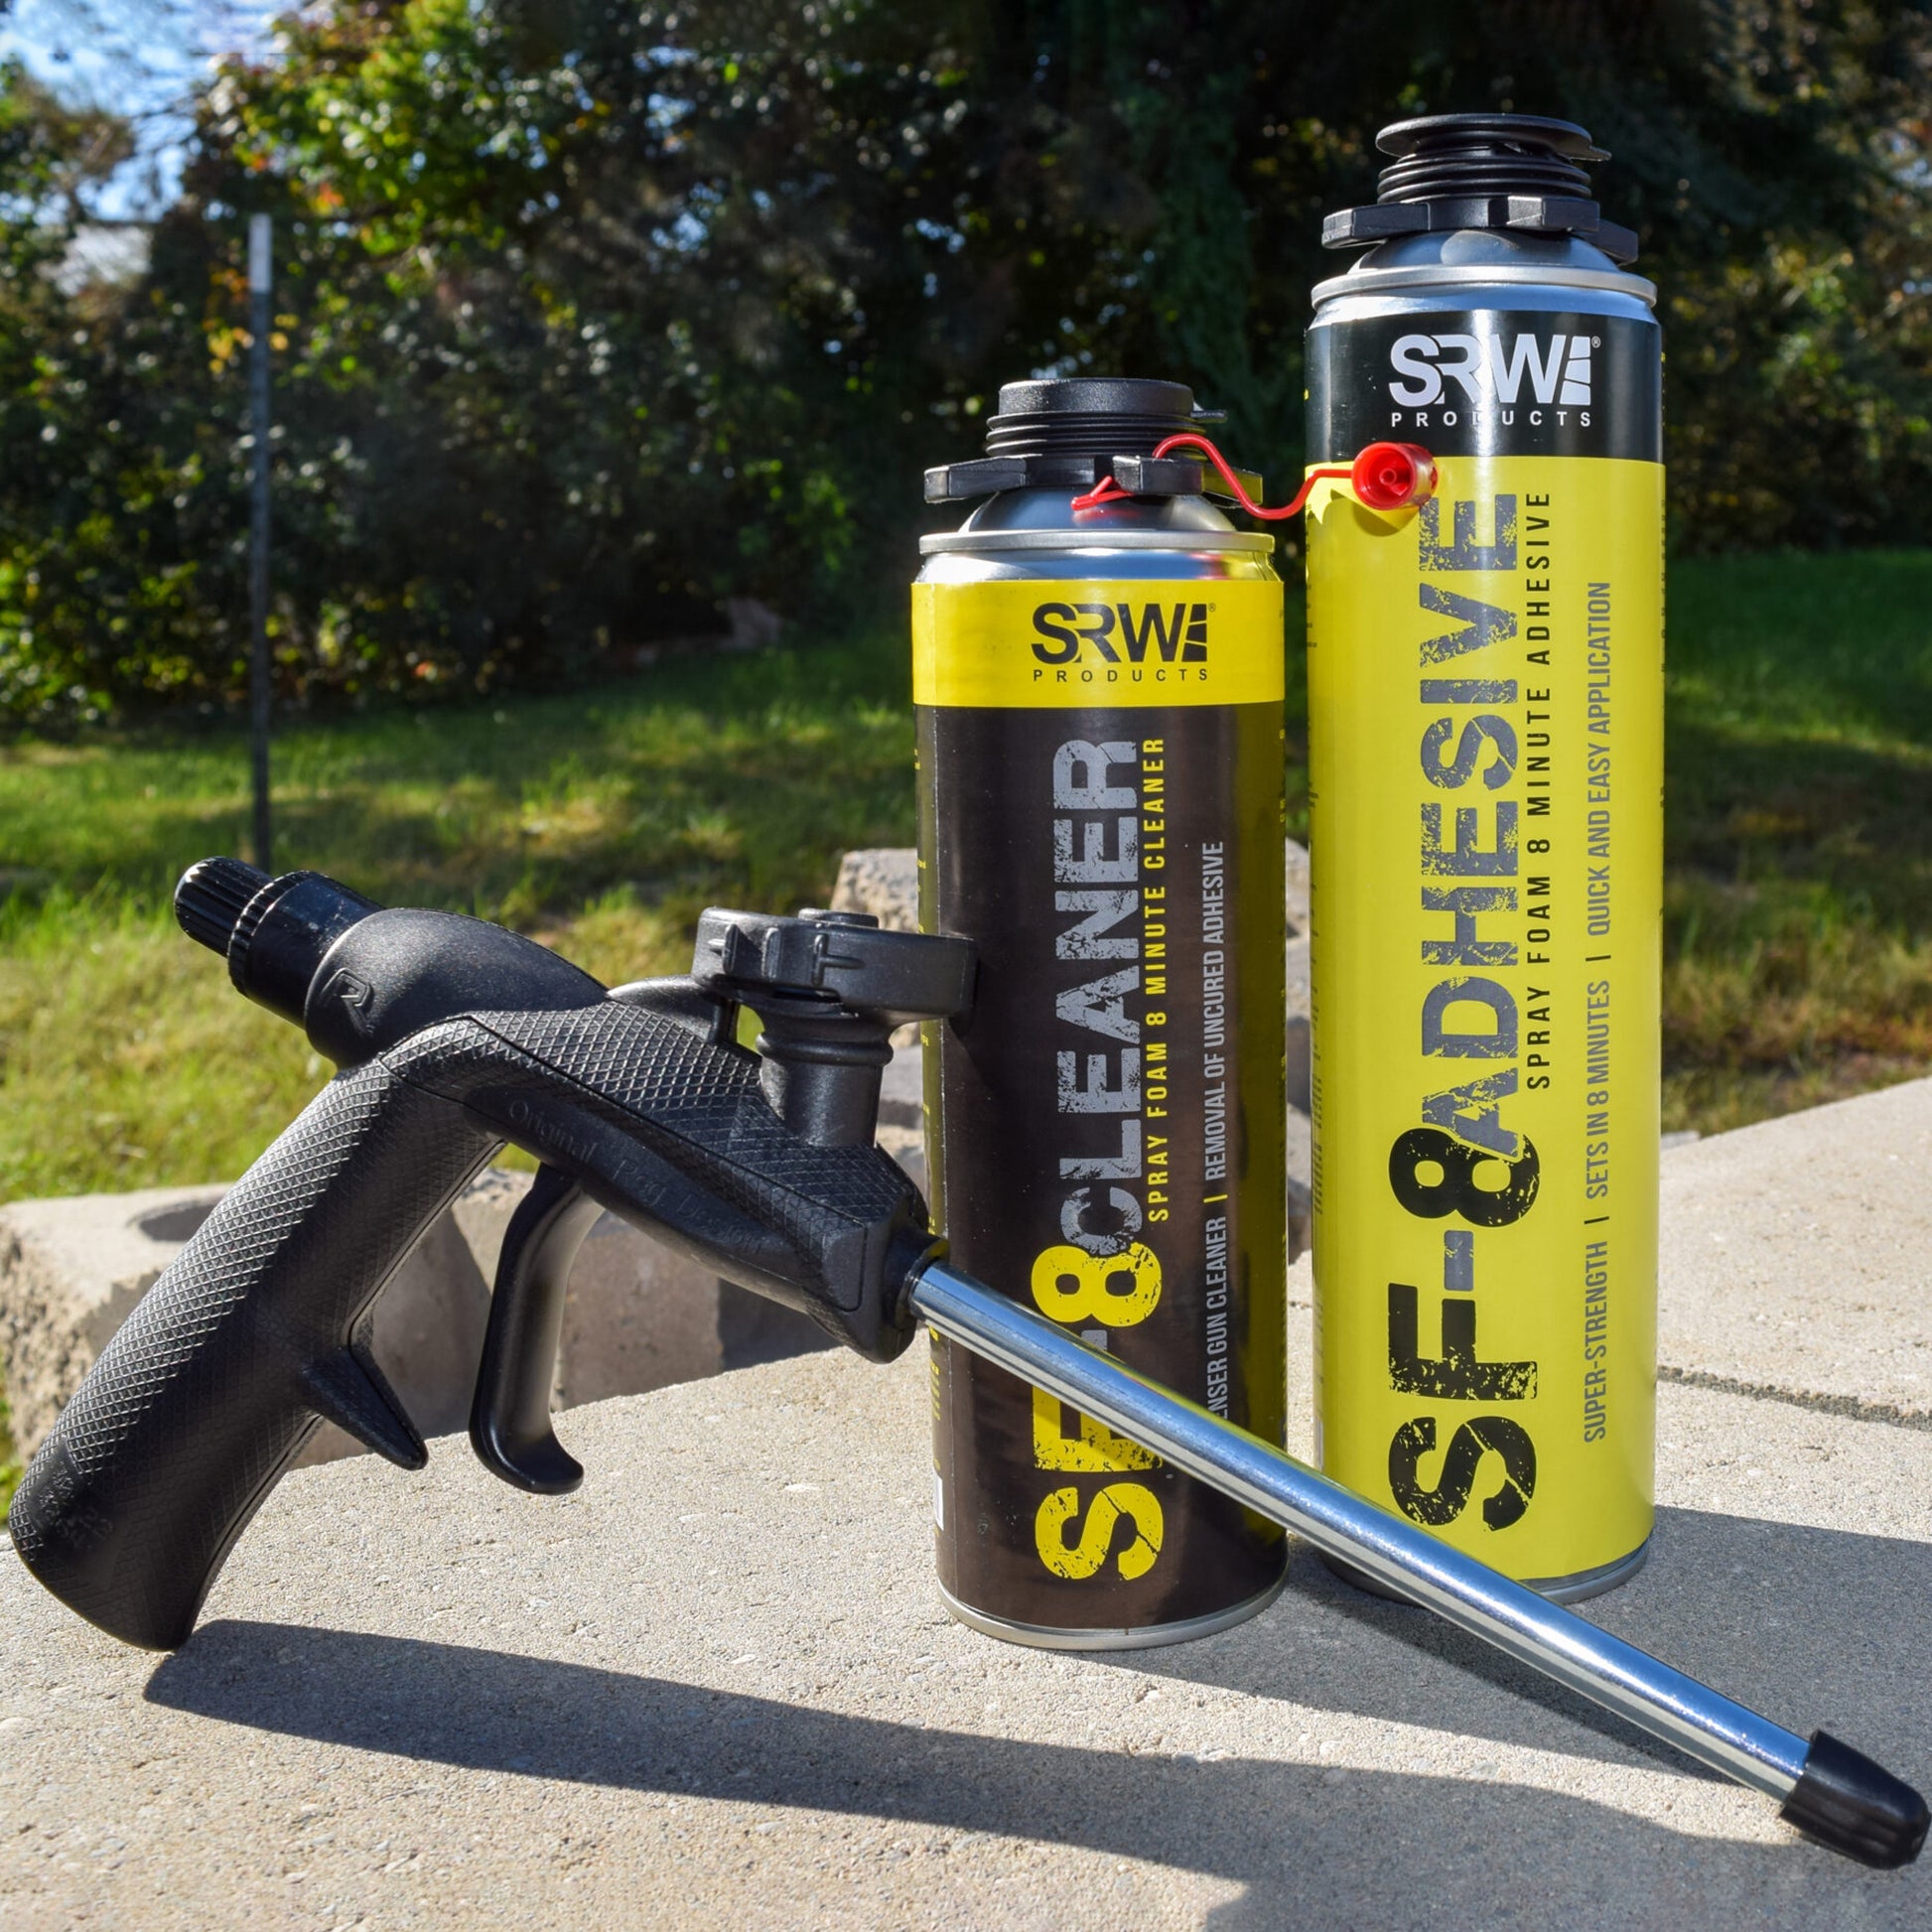 SRW Products SF-8 Adhesive essentials kit